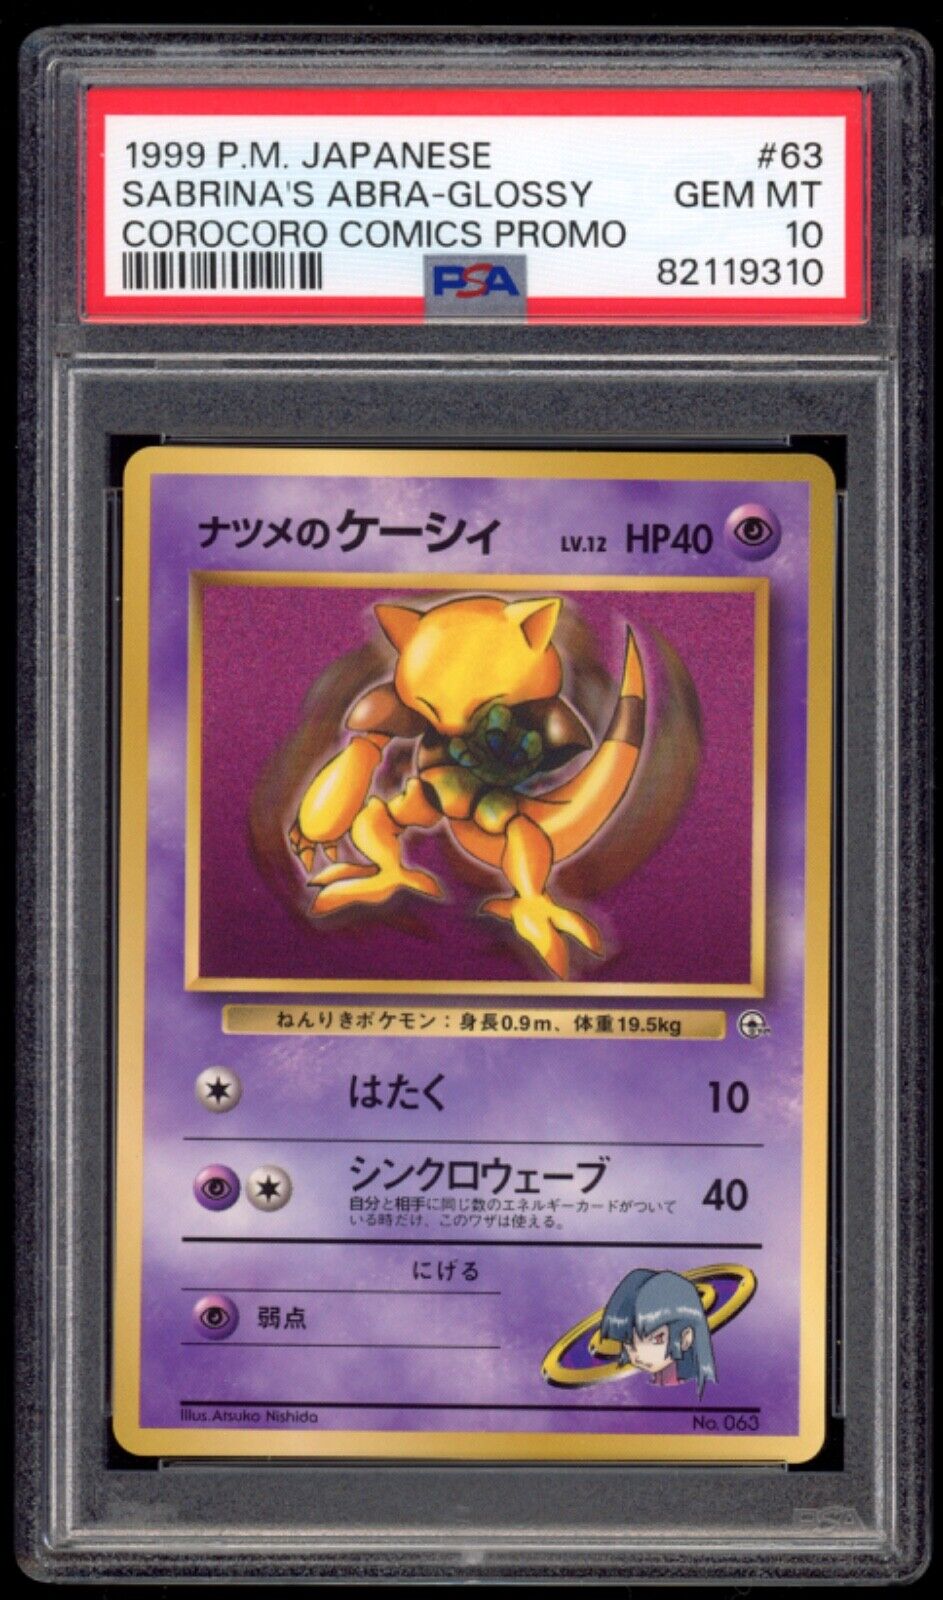 1999 PSA 10 Gem Mint Sabrina's Abra Glossy CoroCoro Japanese Promo Pokemon Card